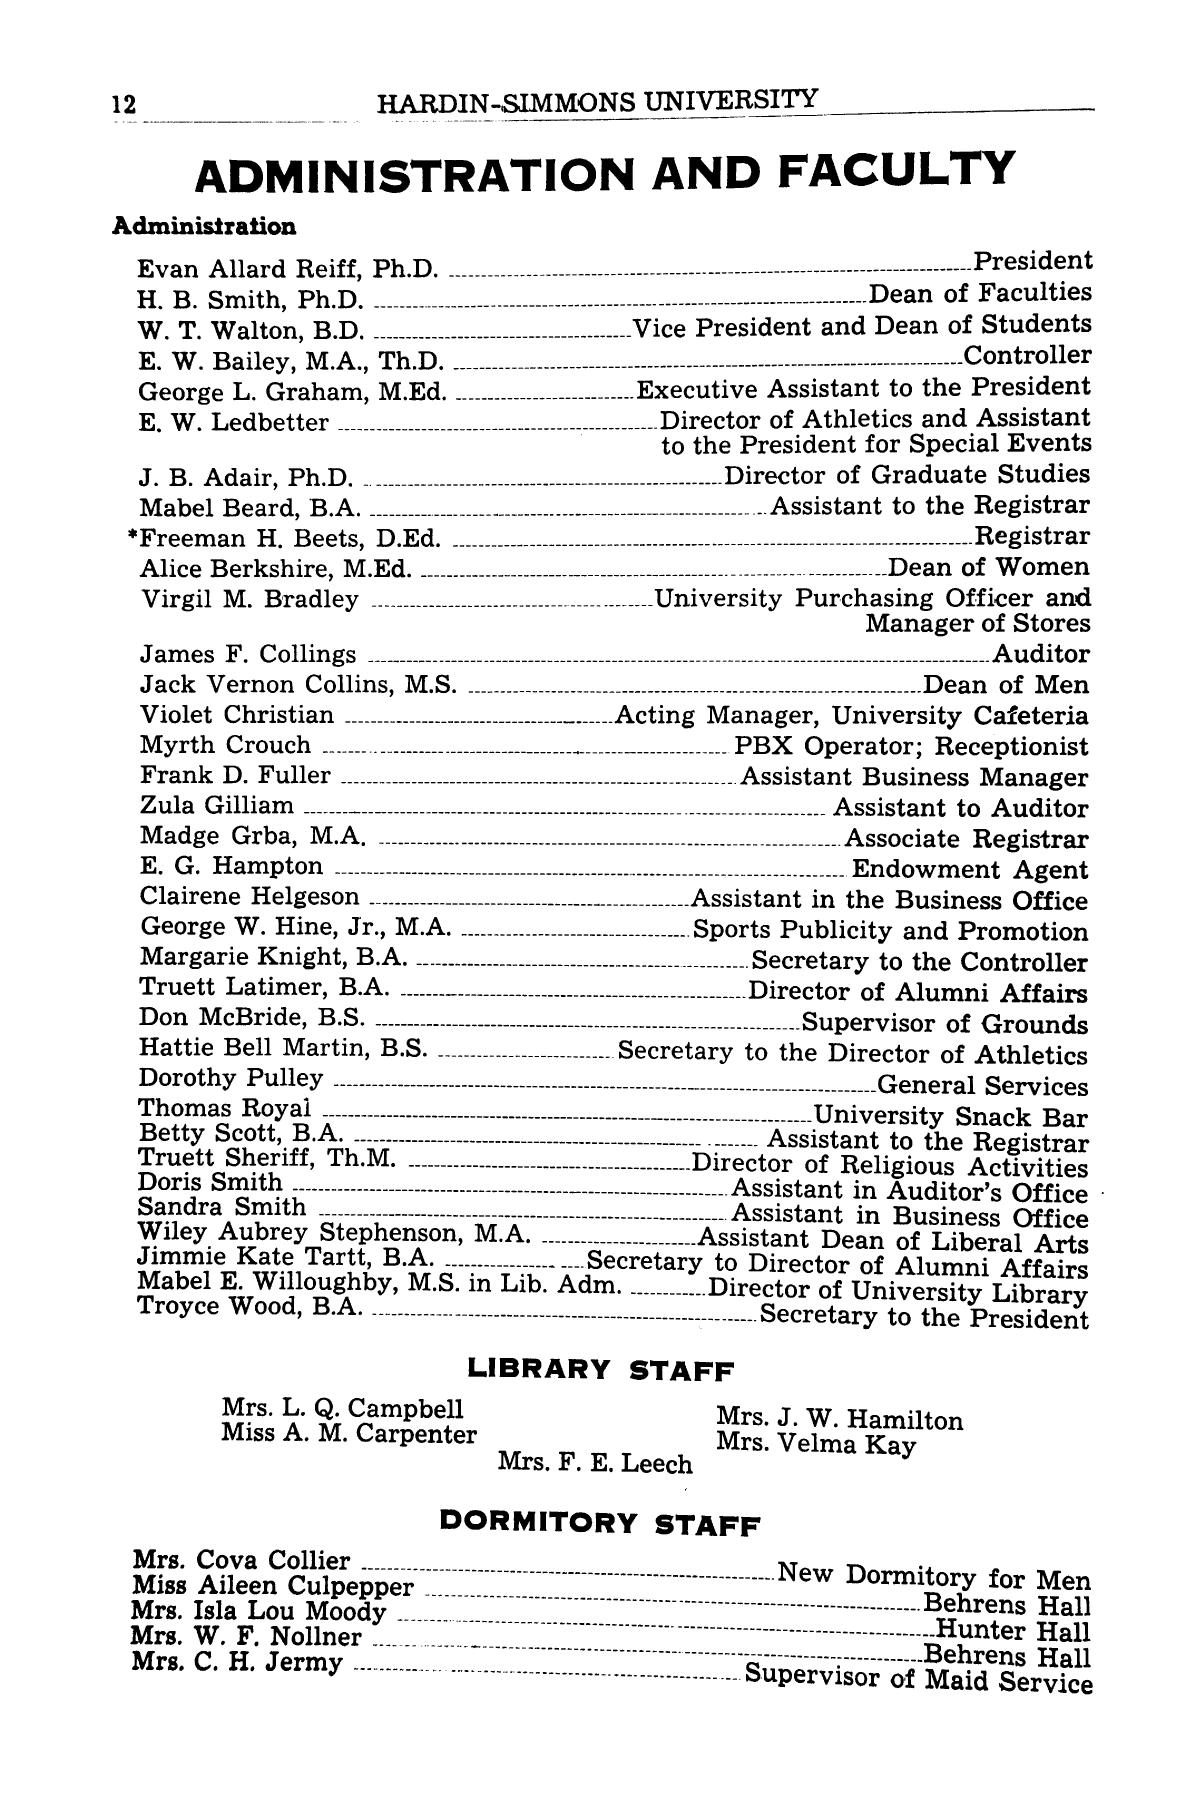 Catalog of Hardin-Simmons University, 1956-1957
                                                
                                                    12
                                                